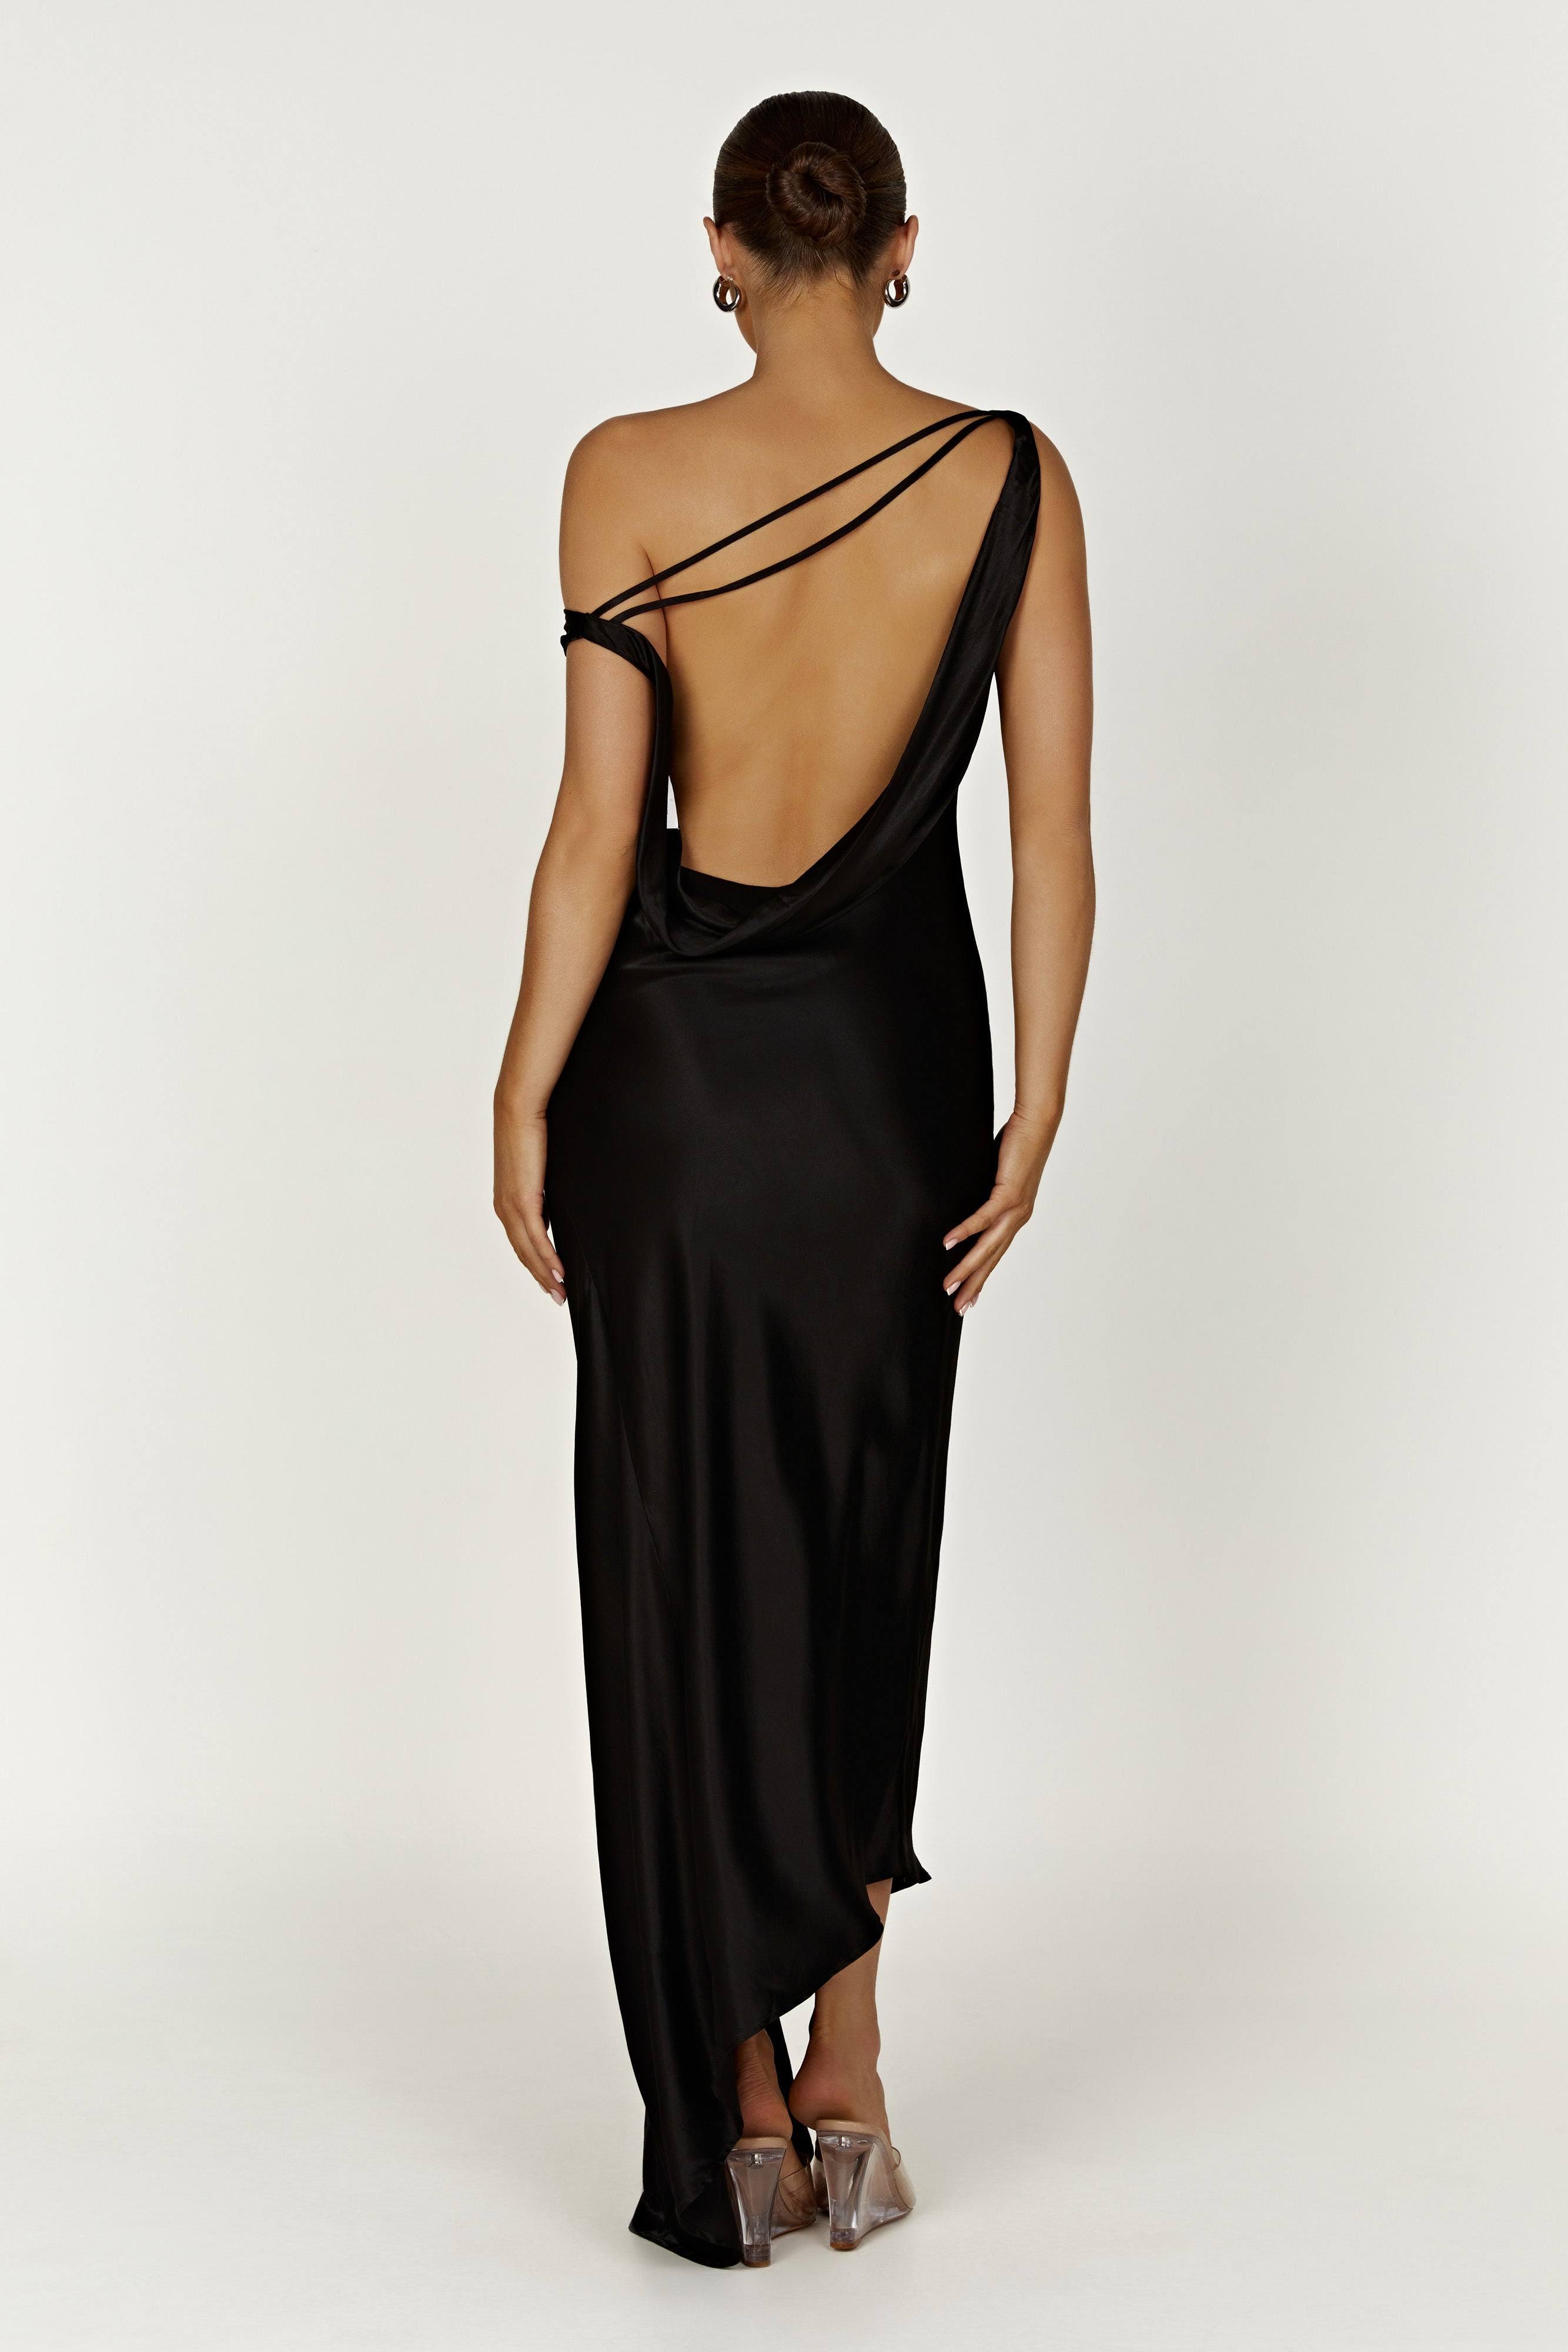 YVETTE: Asymmetrical Slip Maxi Dress with a Sensual Low Back Design | Image